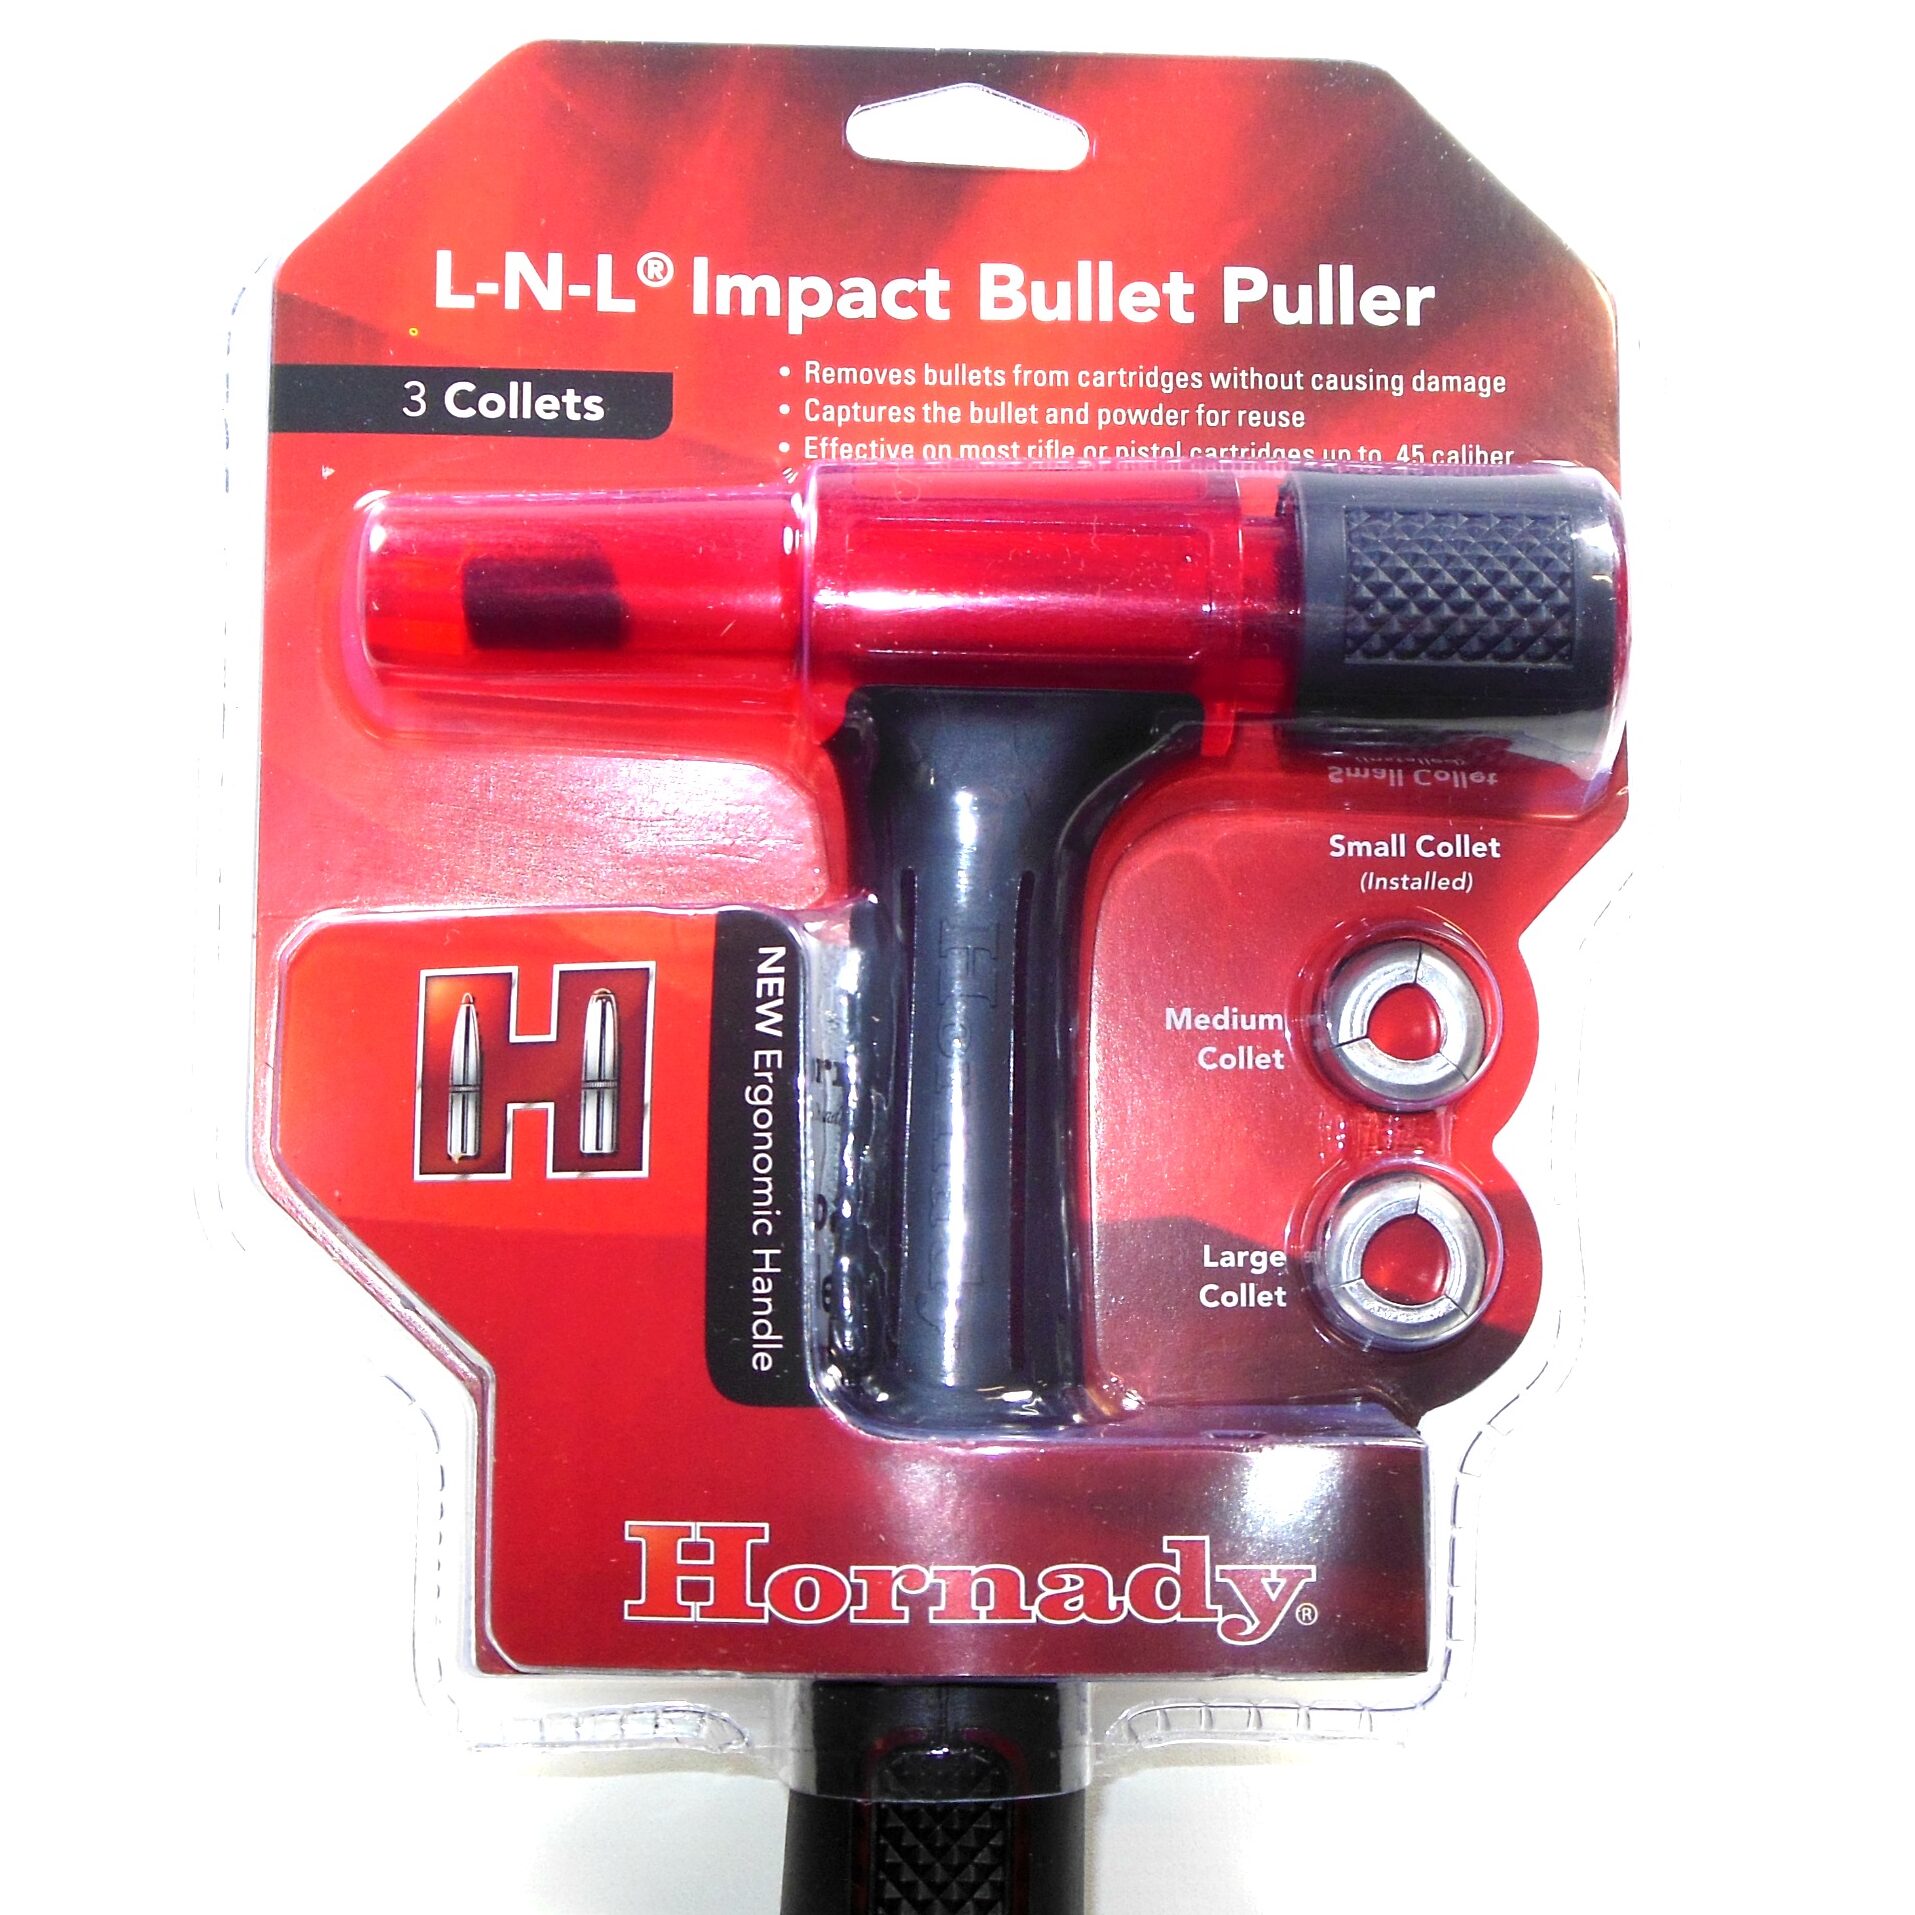 Martello cinetico Hornady L-N-L Impact Bullet Puller #050092 » Sport Hunt